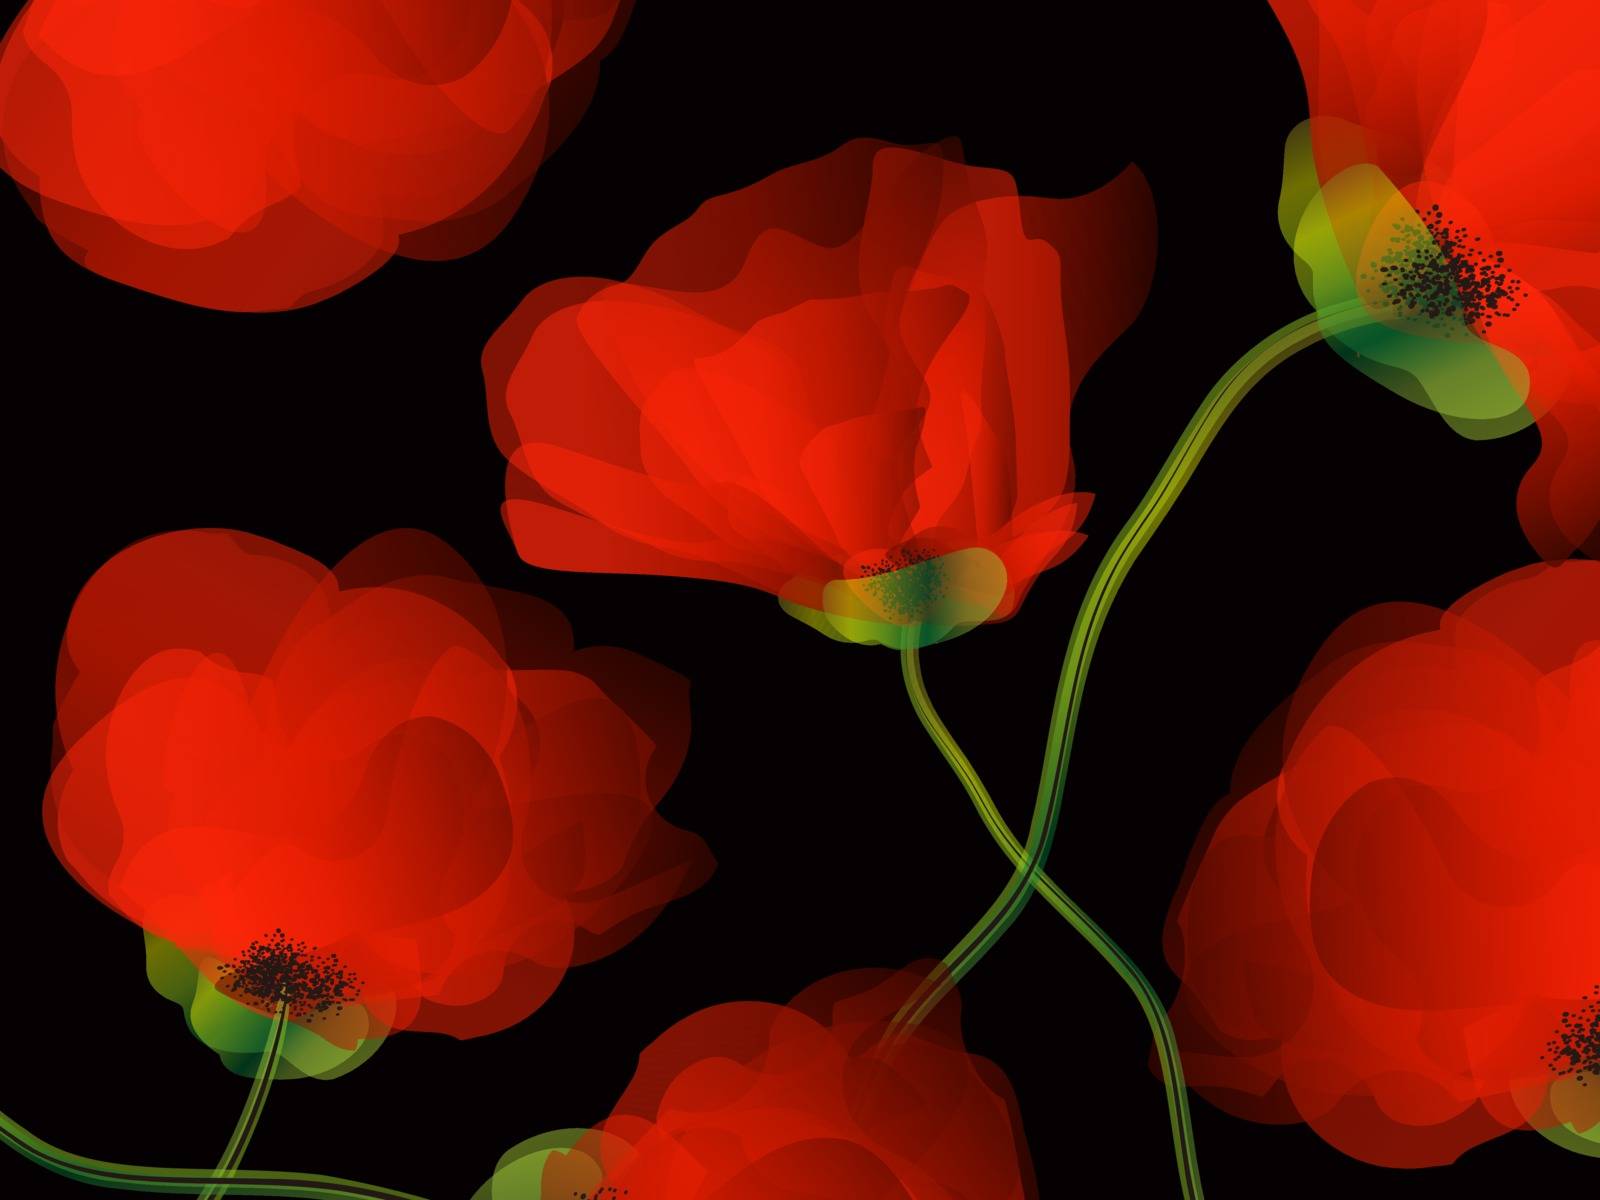 Poppy background illustration by Lirch